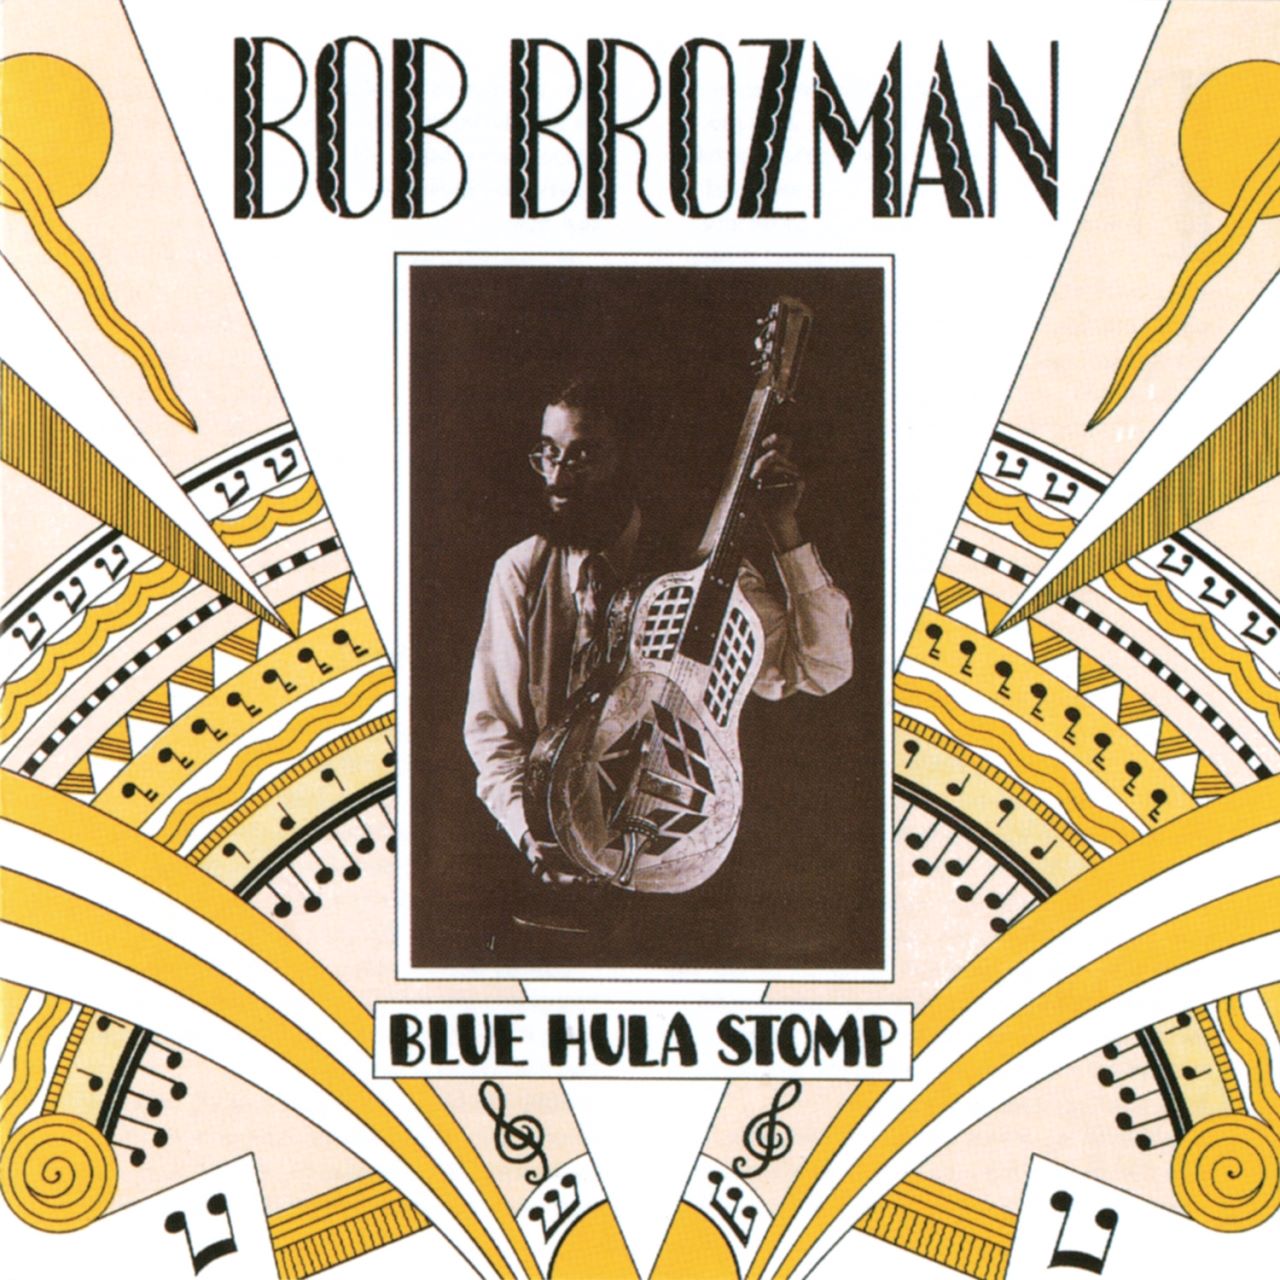 Bob Brozman - Blue Hula Stomp cover album